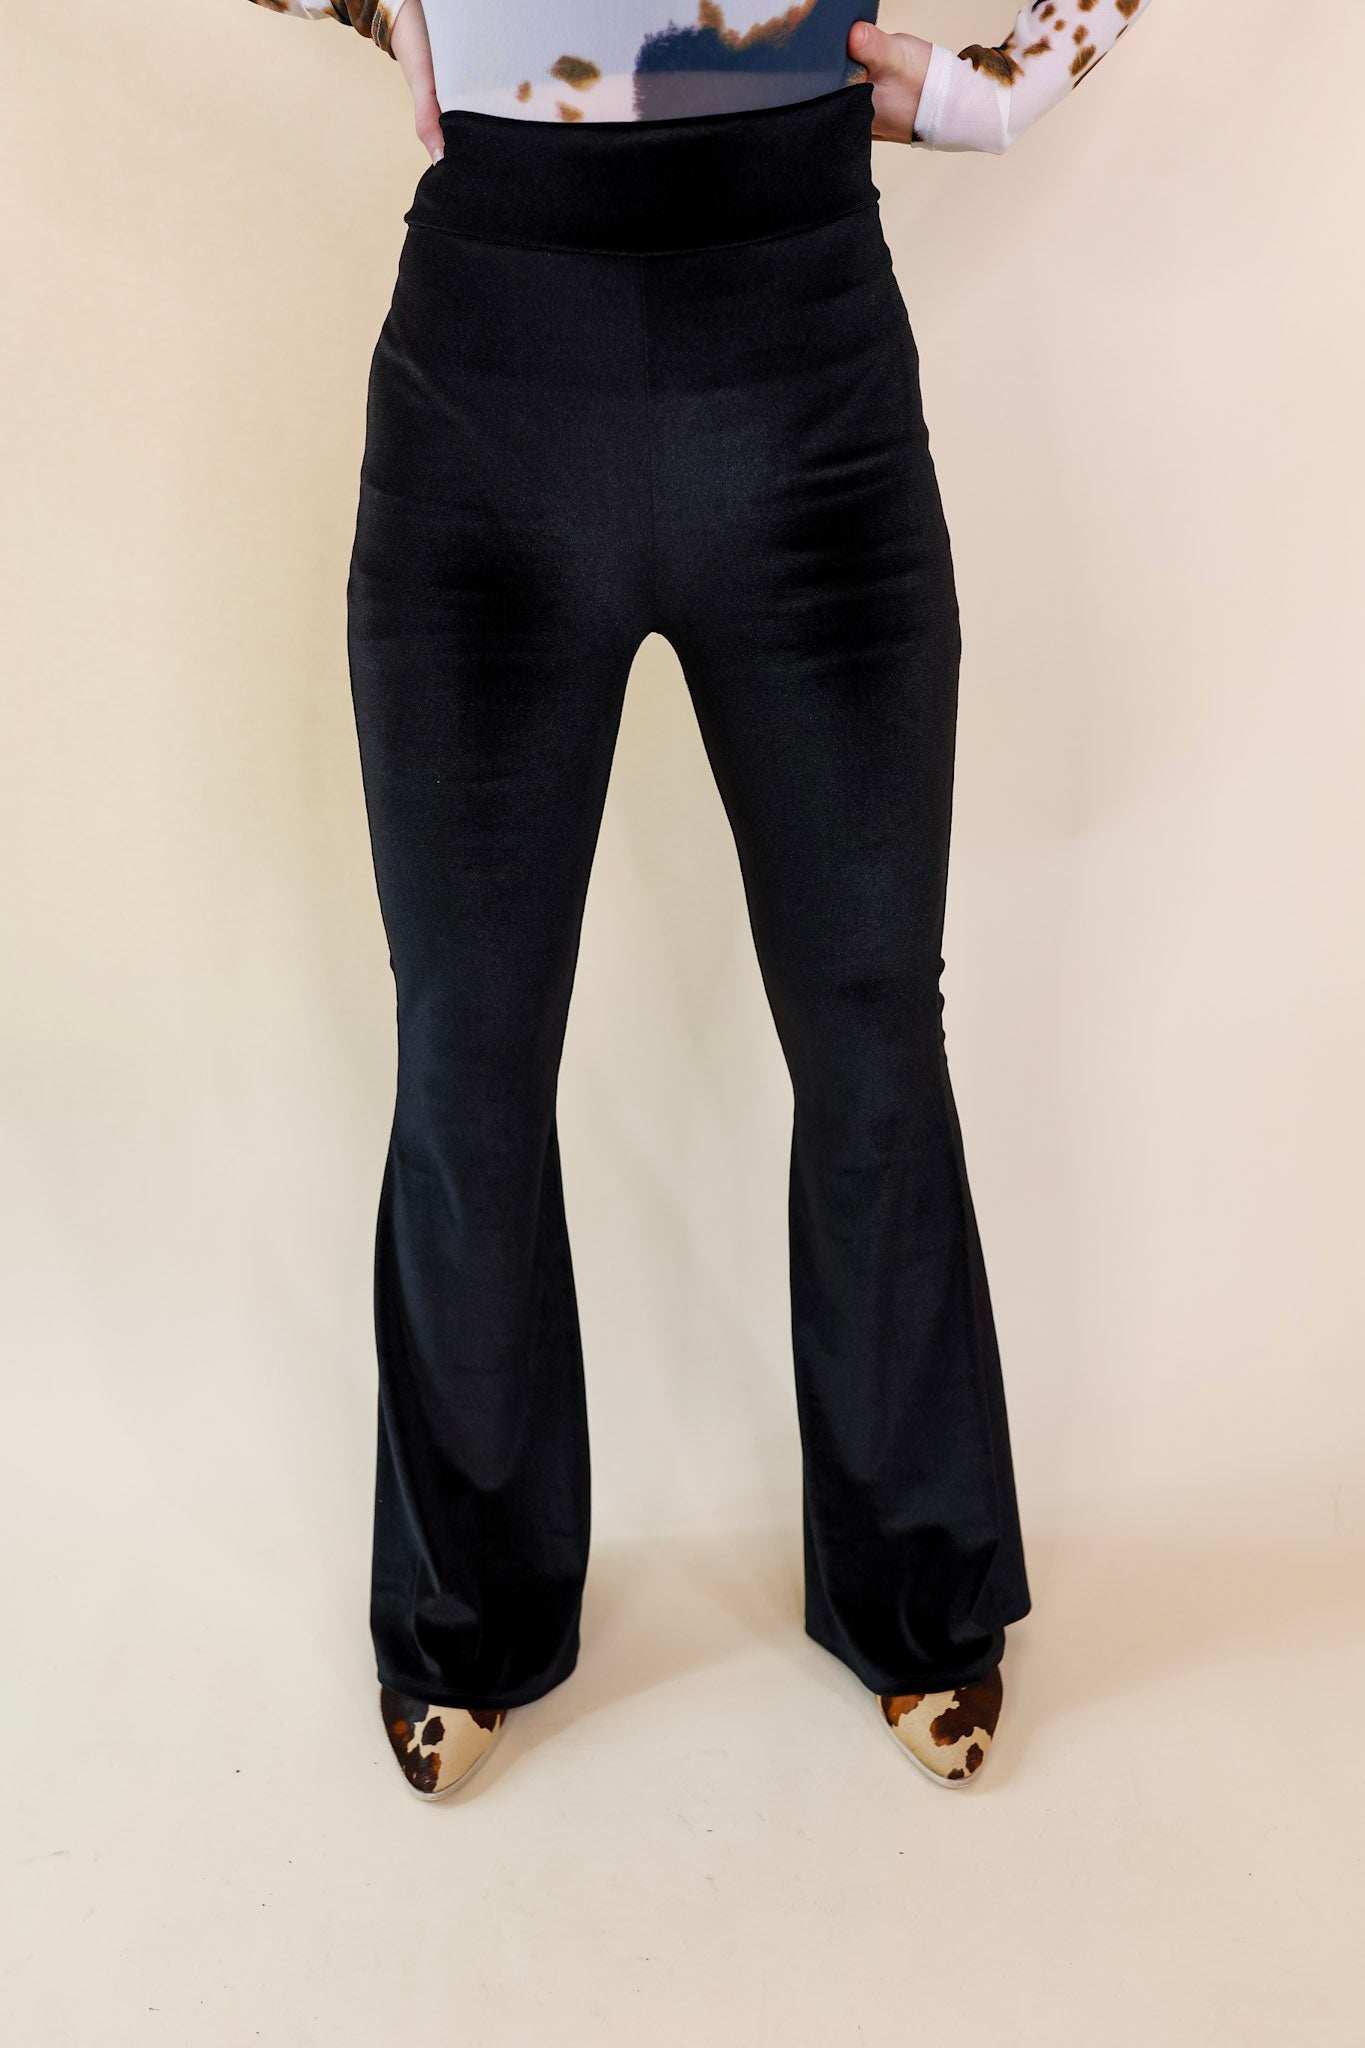 Luxe Standard Velvet Bell Bottom Pants in Black - Giddy Up Glamour Boutique